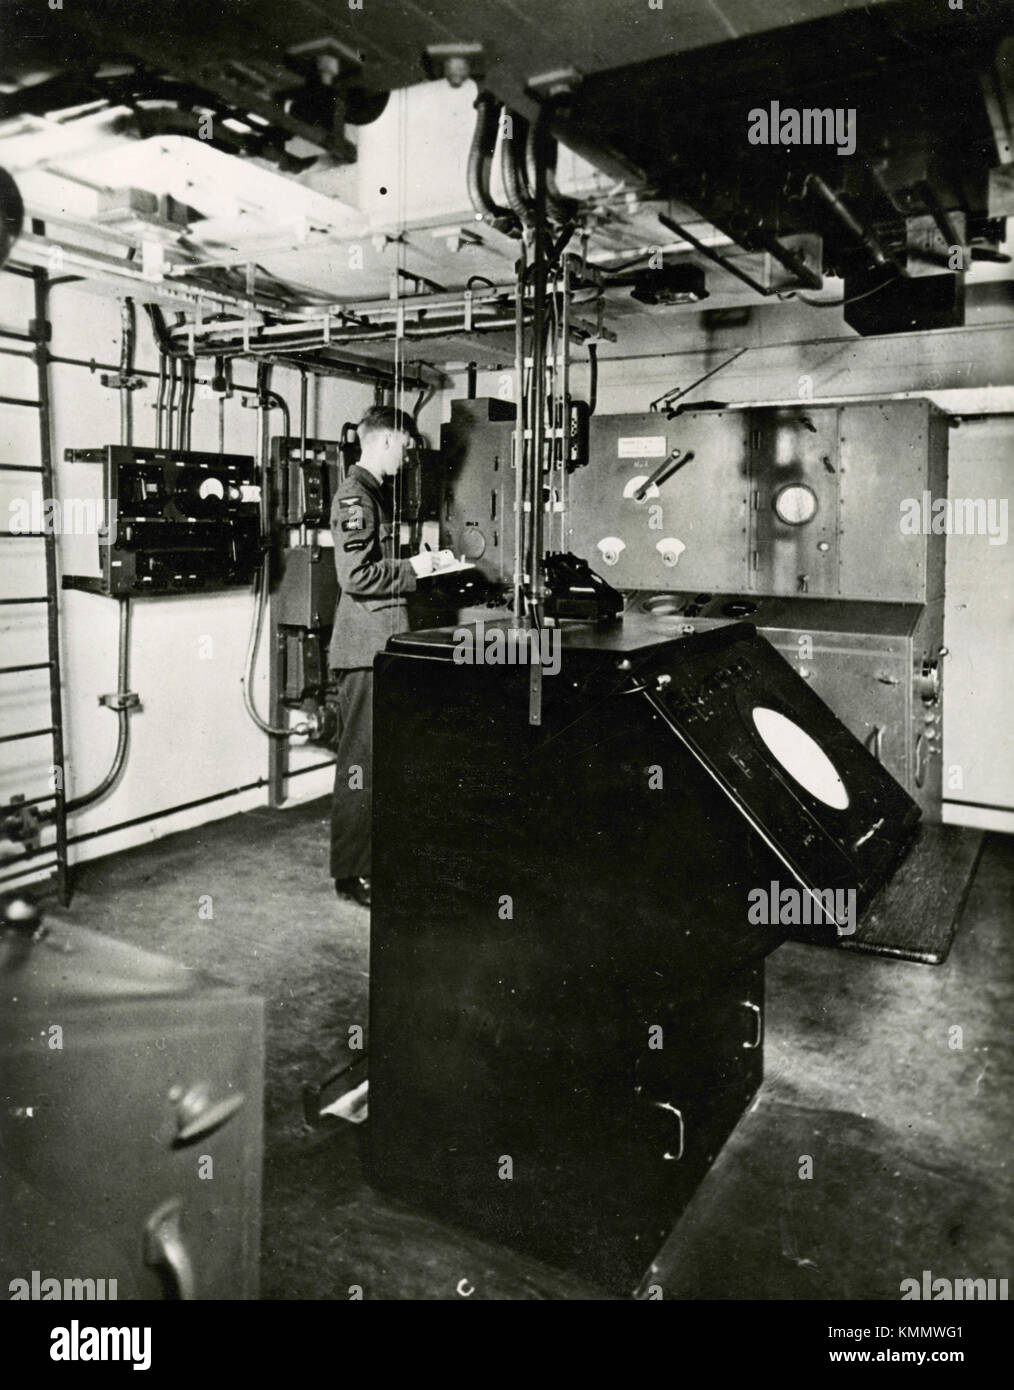 L'équipement de radar à bord de l'aéronef, UK 1945 Banque D'Images